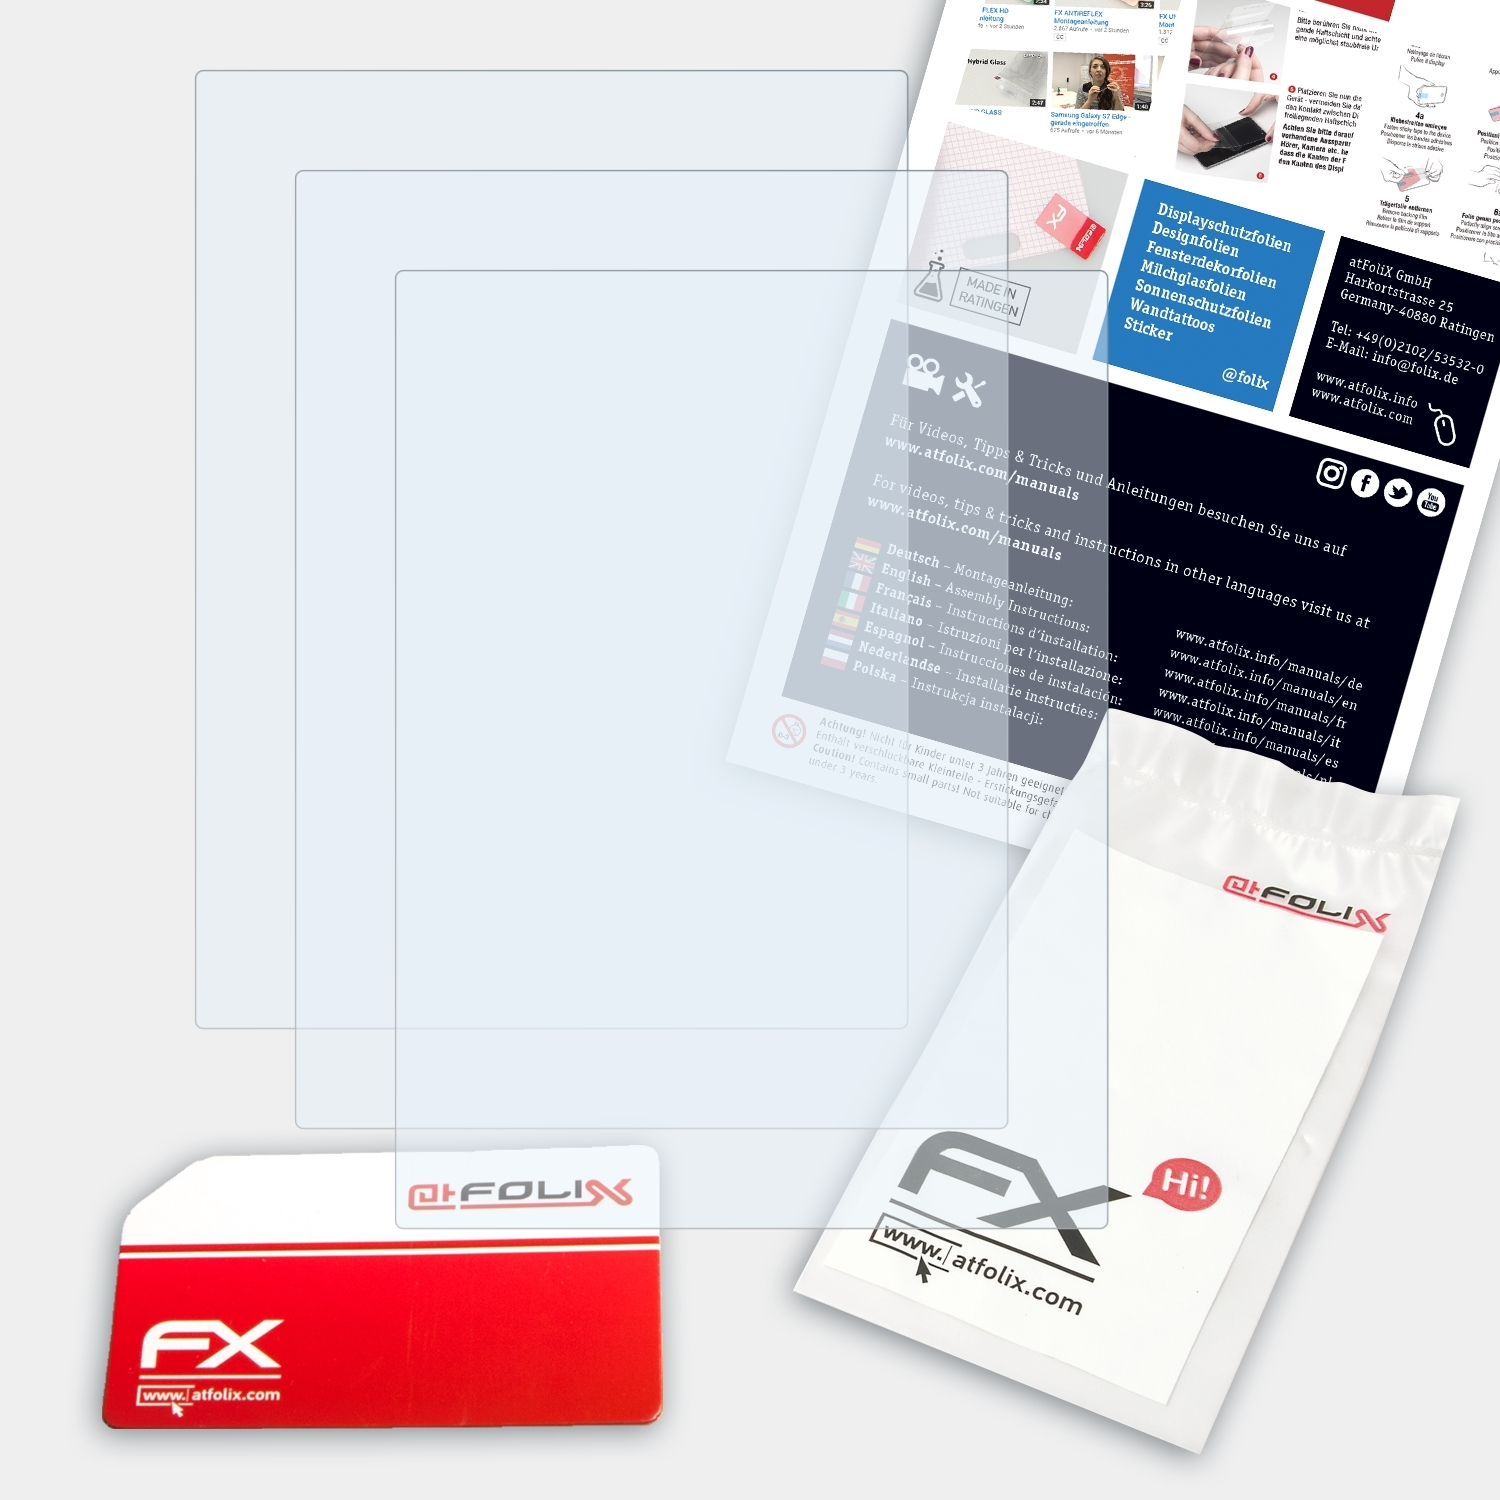 3x 32) FX-Clear Displayschutz(für ATFOLIX Falk IBEX